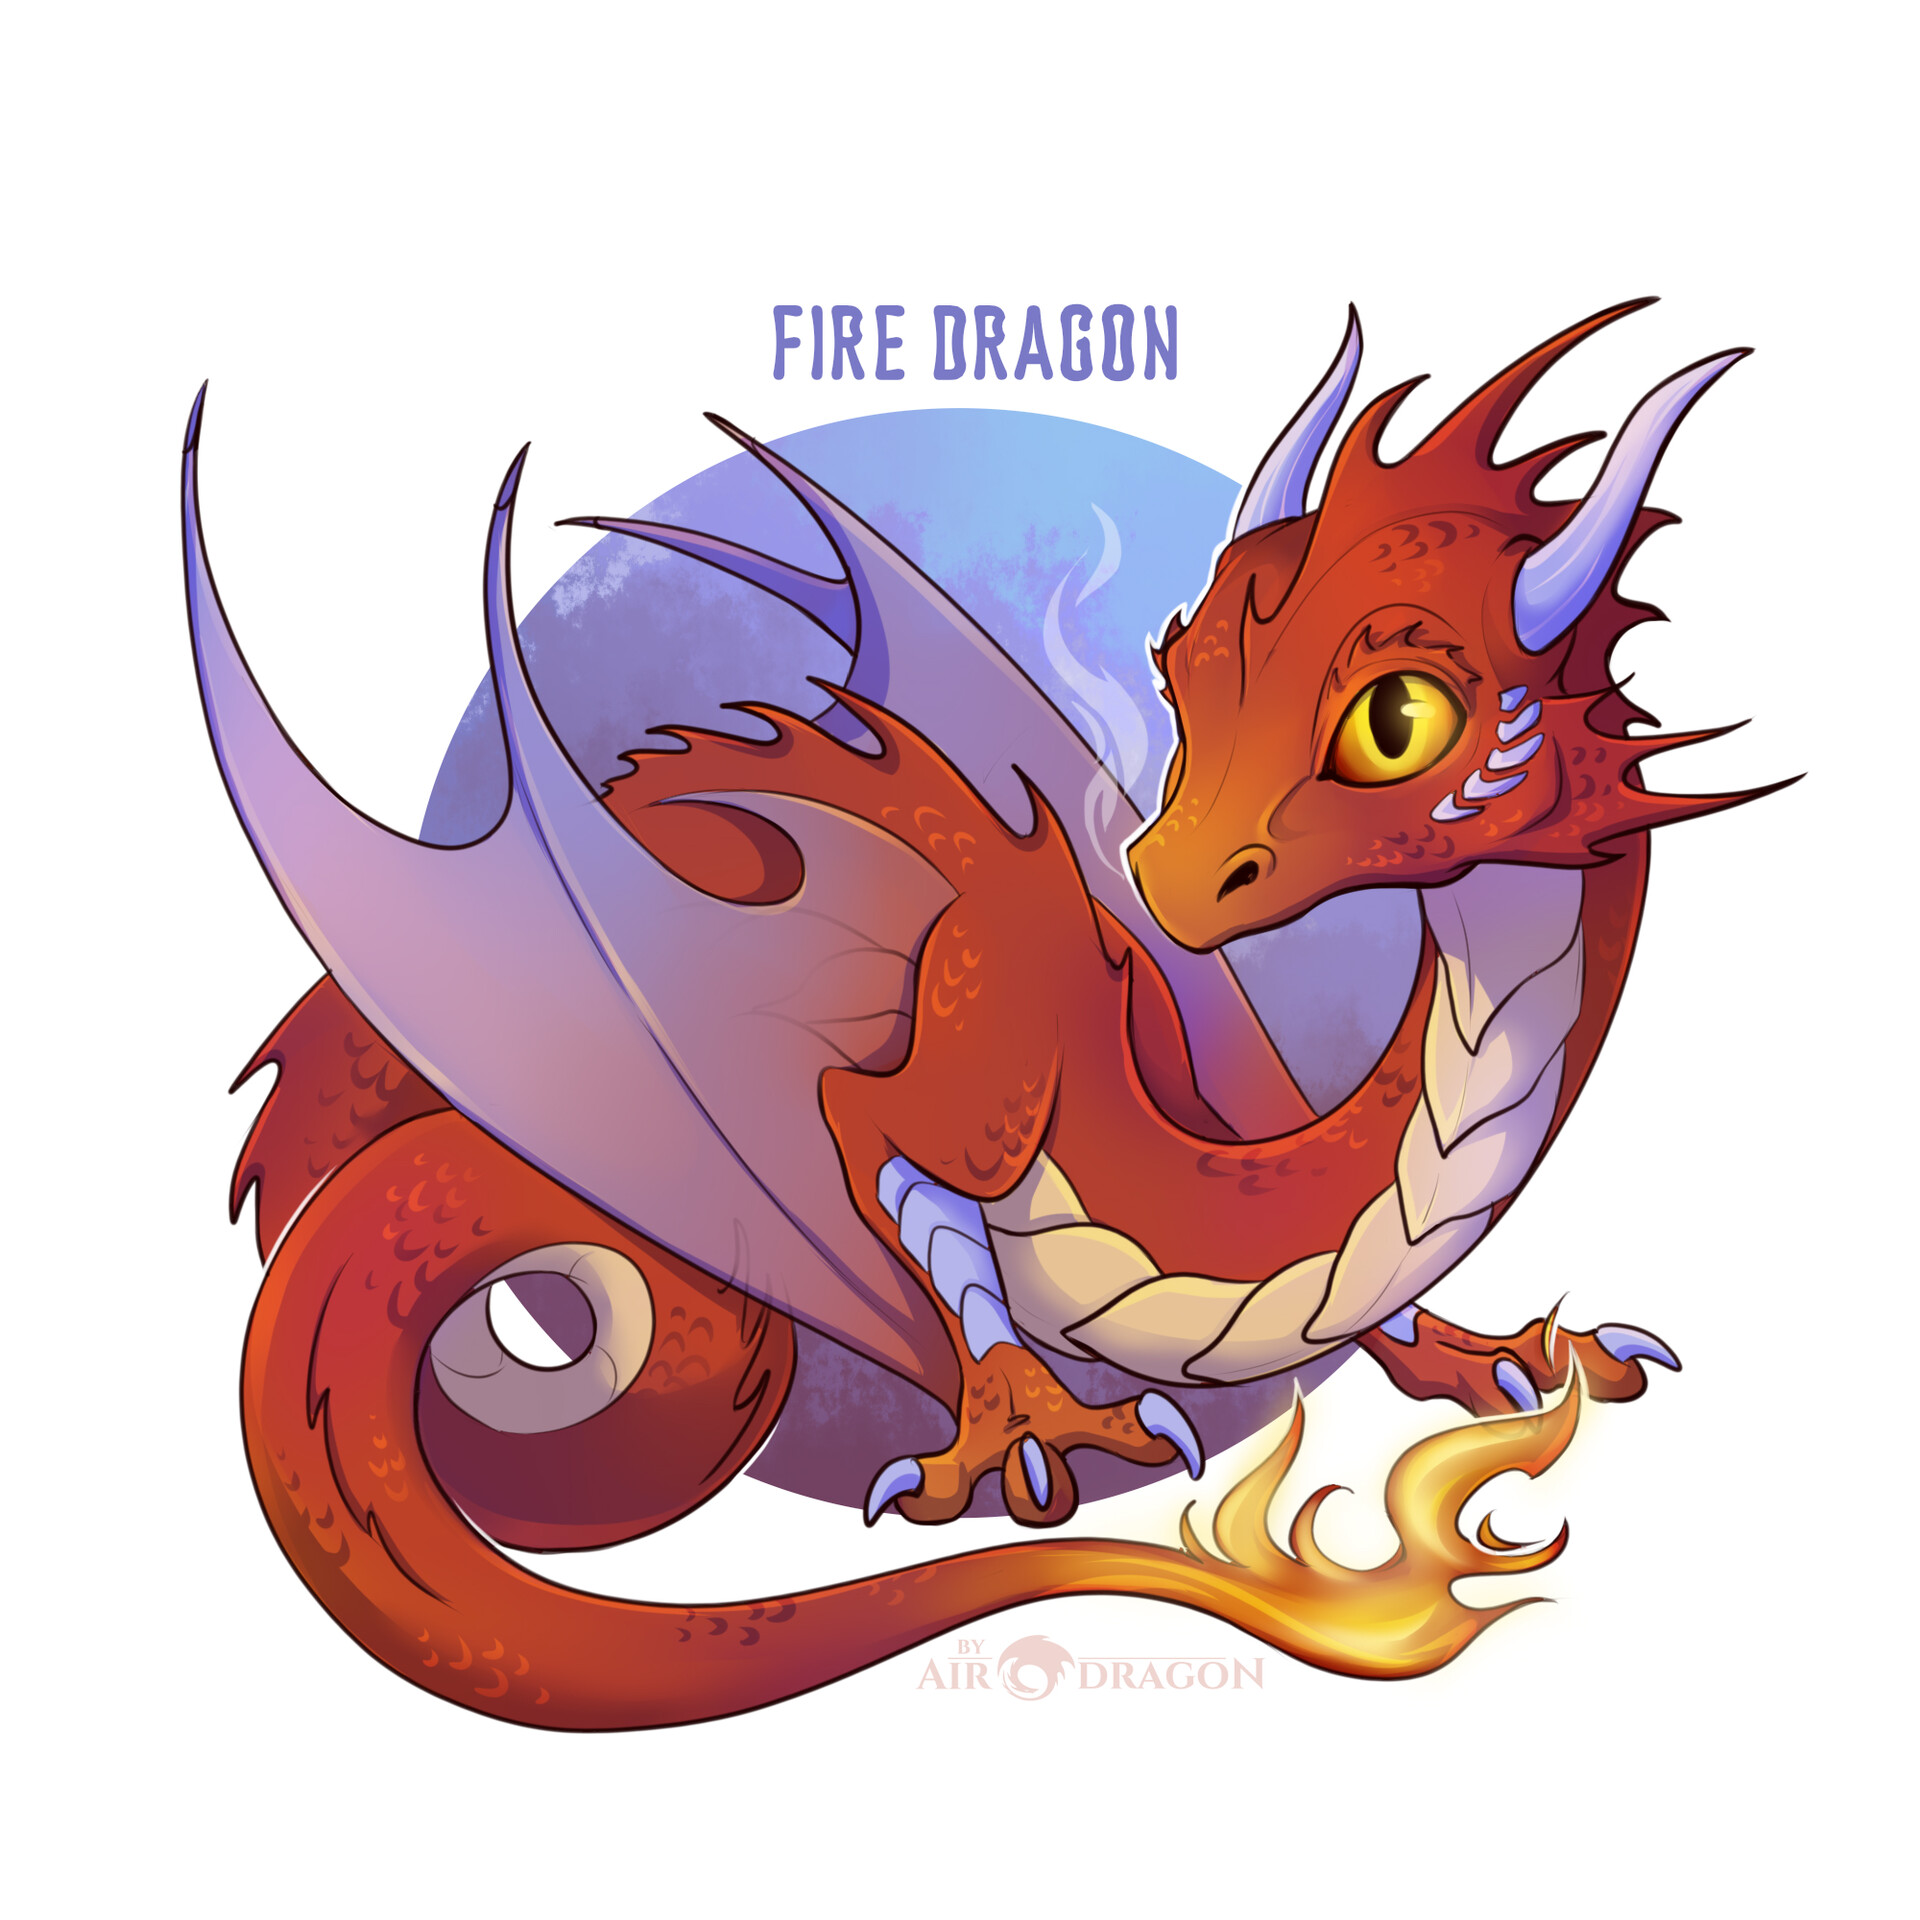 ArtStation - Fire dragon